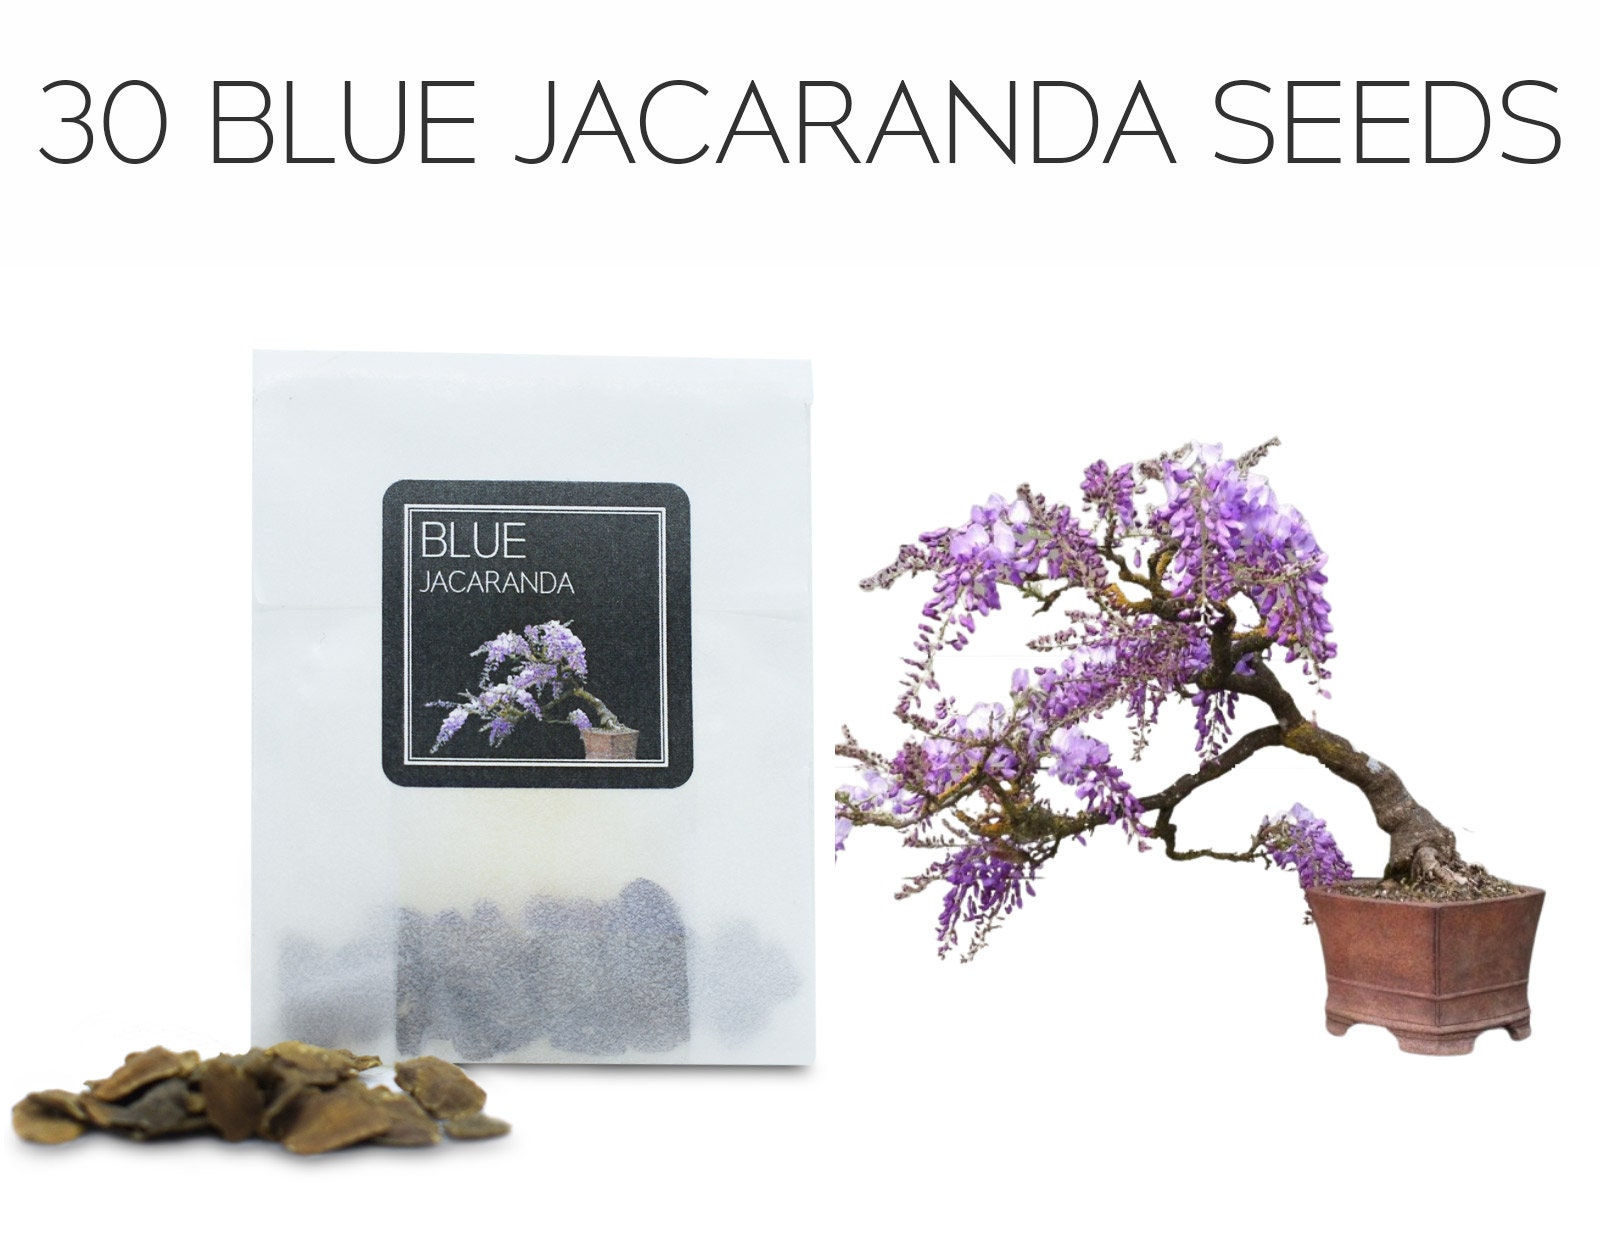 Jacaranda mimosifolia belle Tree Seeds!